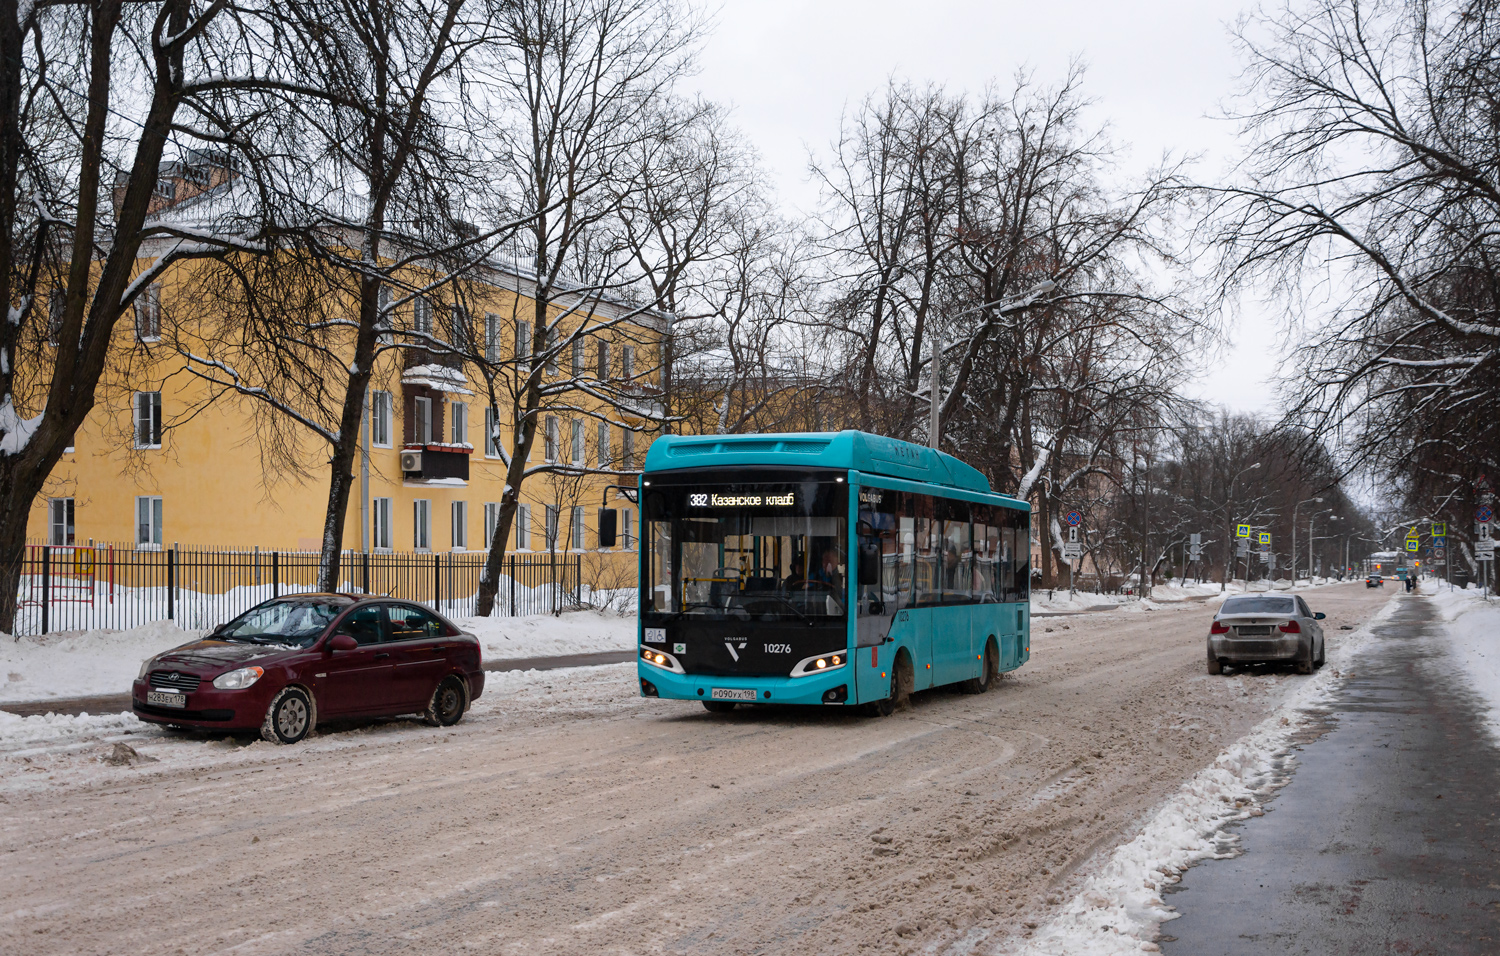 Saint Petersburg, Volgabus-4298.G4 (CNG) # 10276